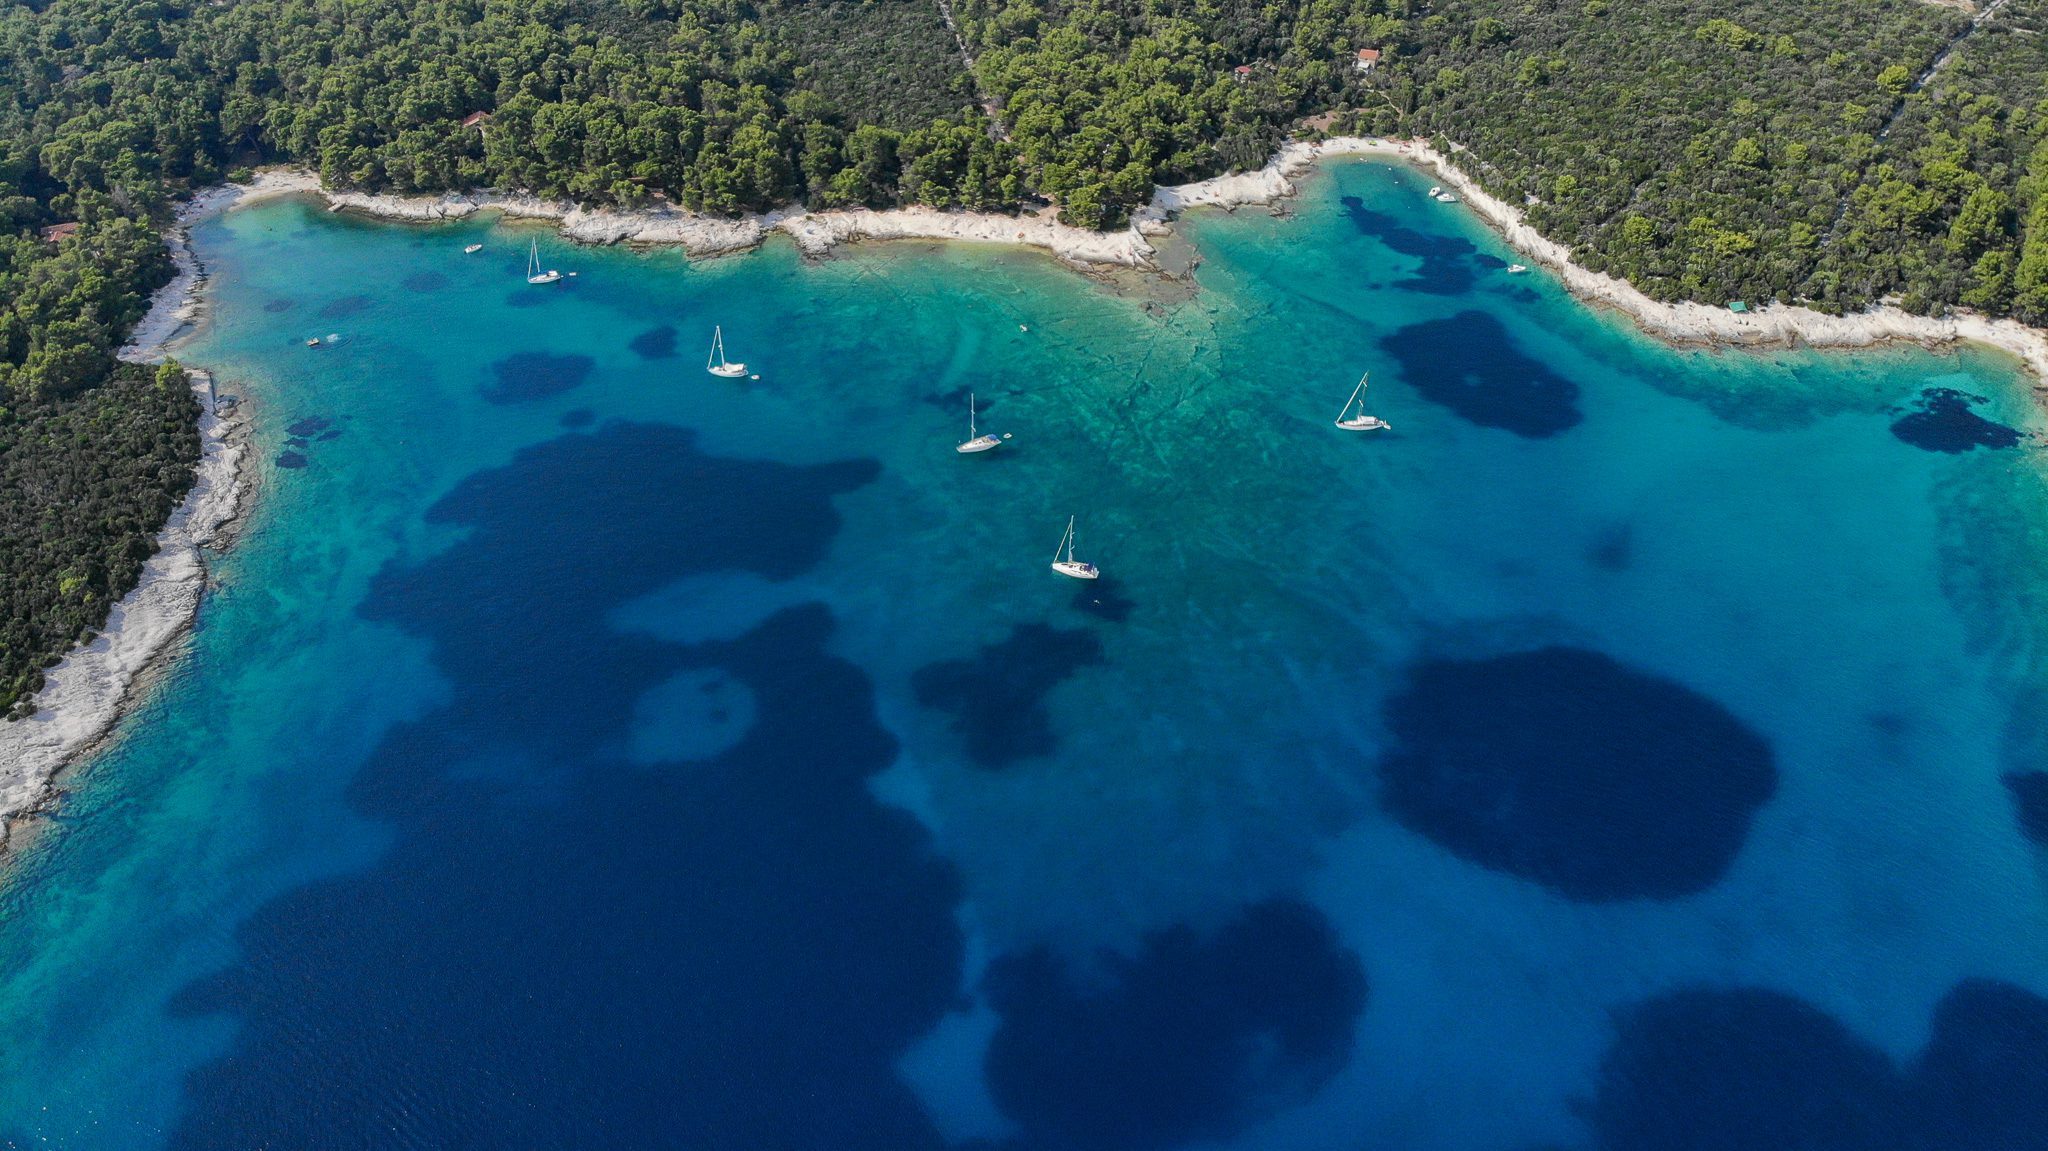 Beautiful view of nature and Adriatic sea at Veli Lošinj Croatia from Ljubicic Tennis Academy